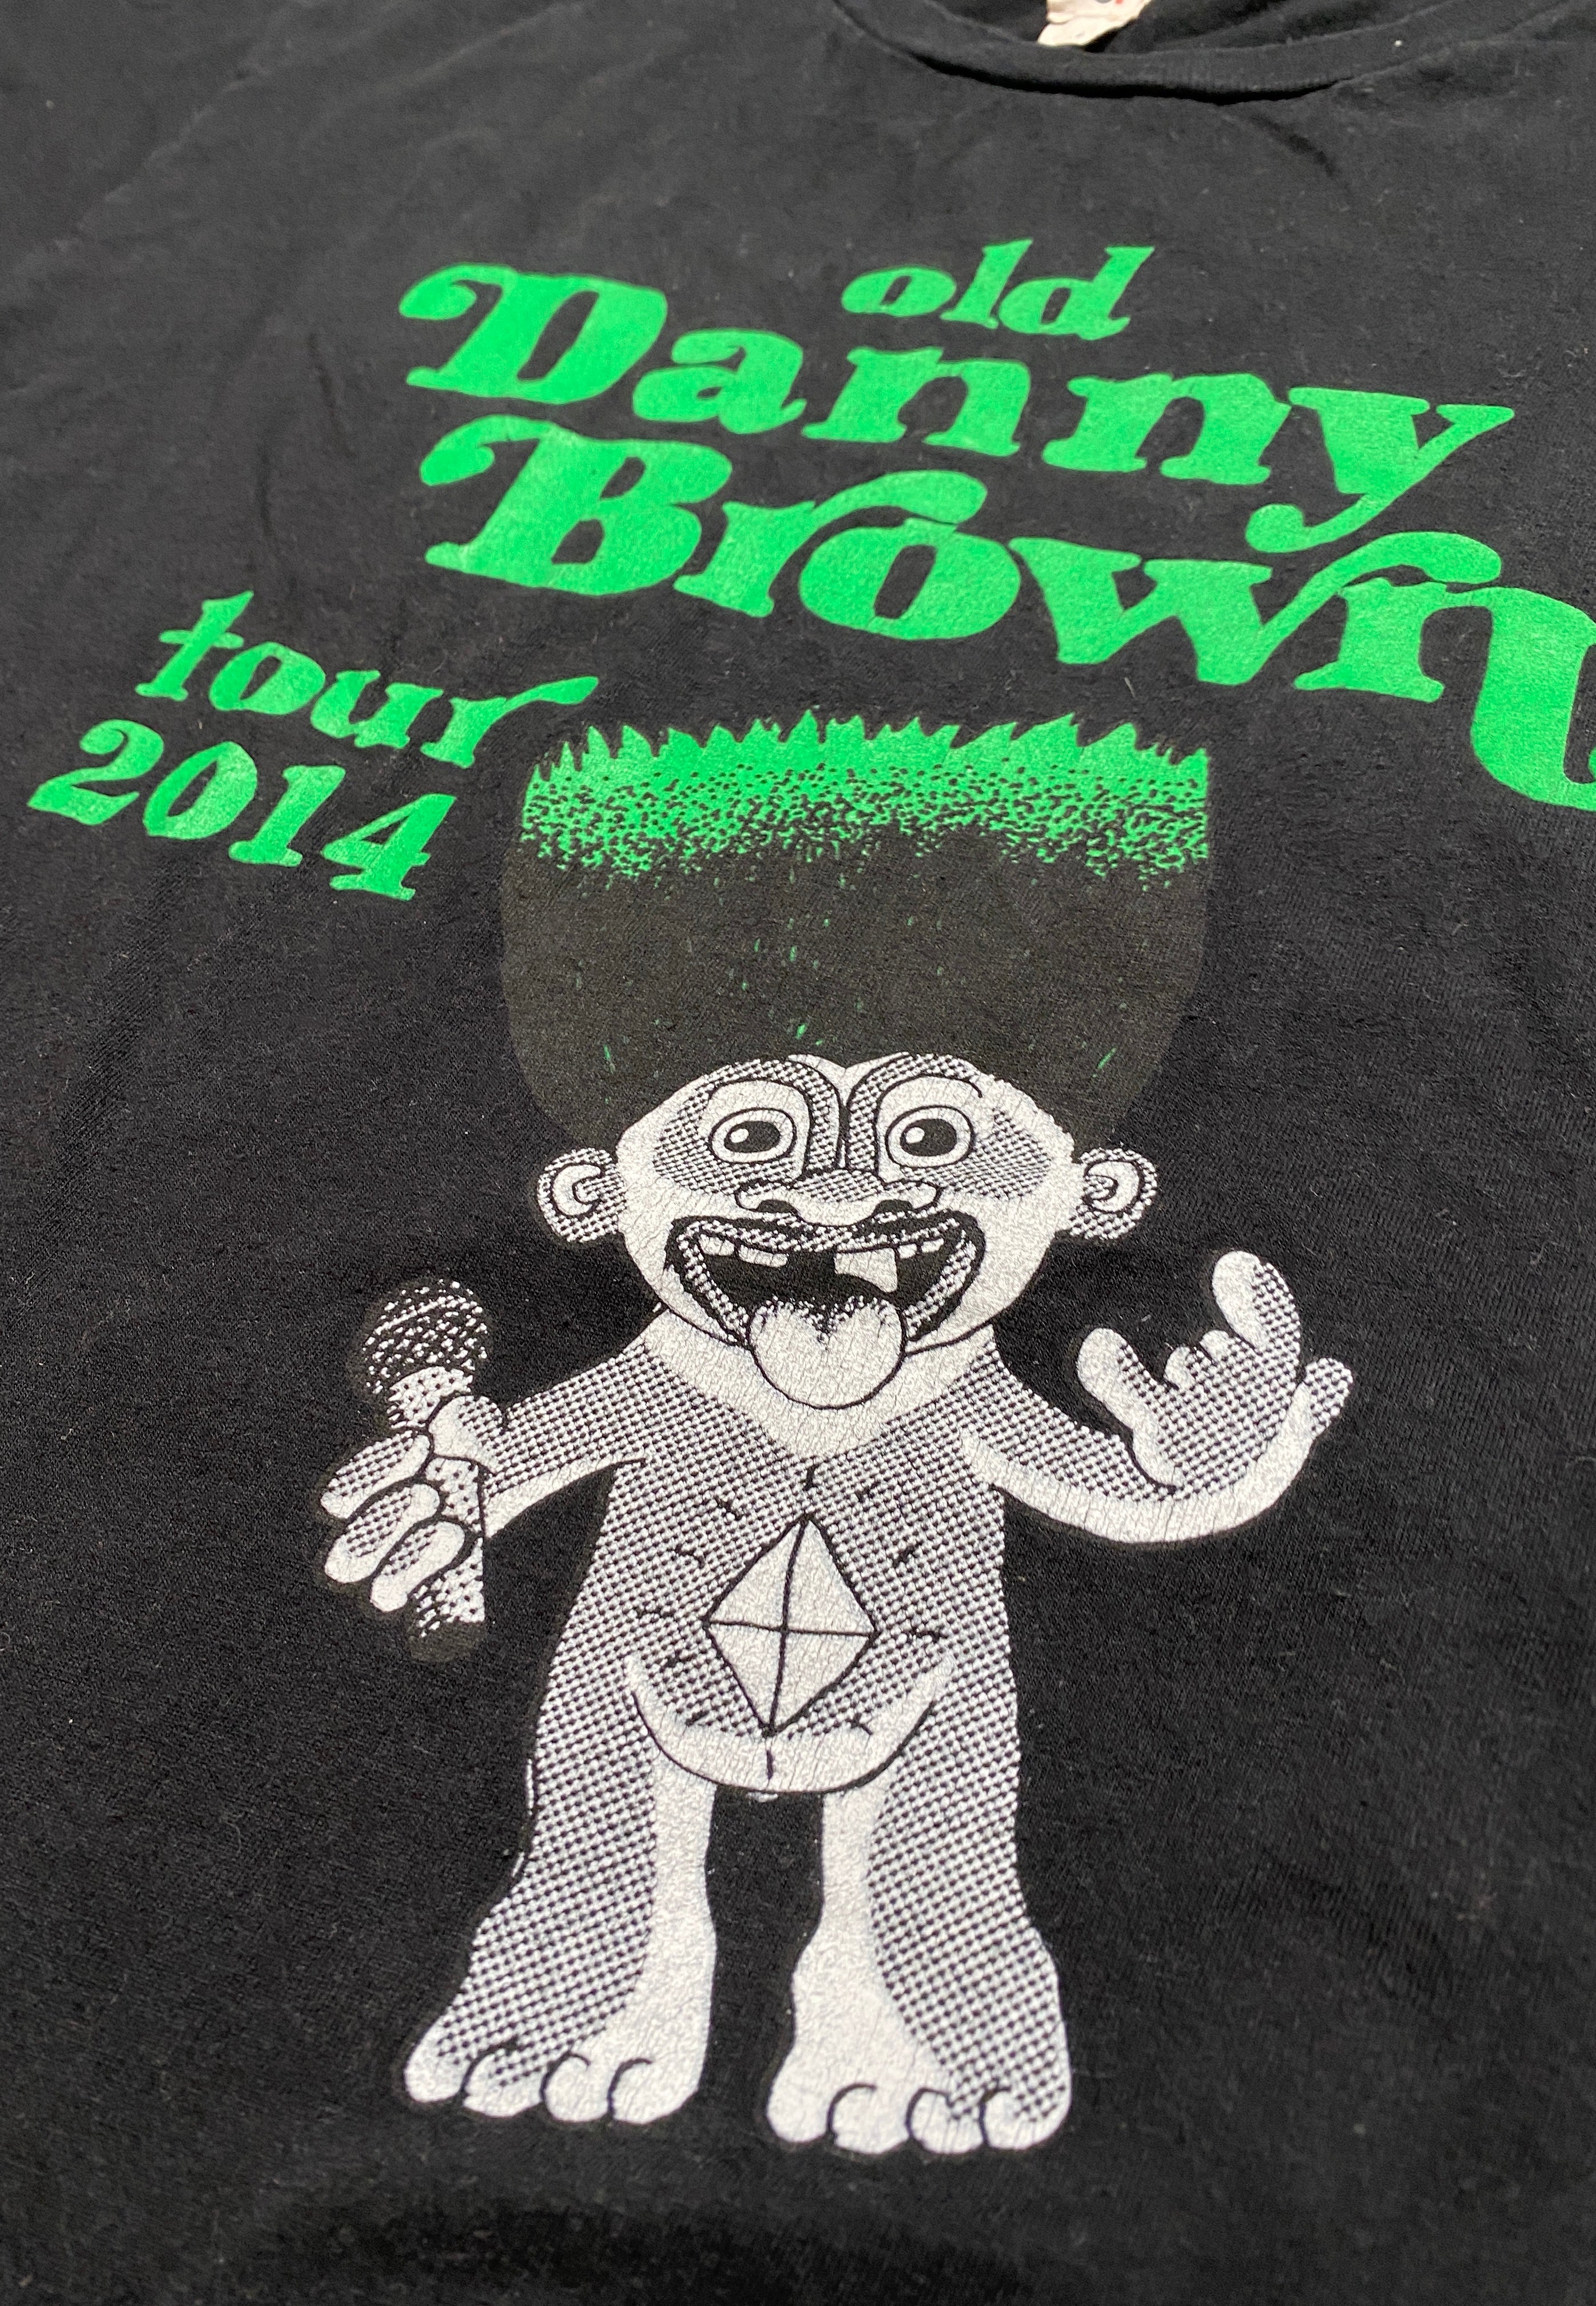 Danny Brown - Troll Doll Old 2014 North American Tour Shirt Size Medium